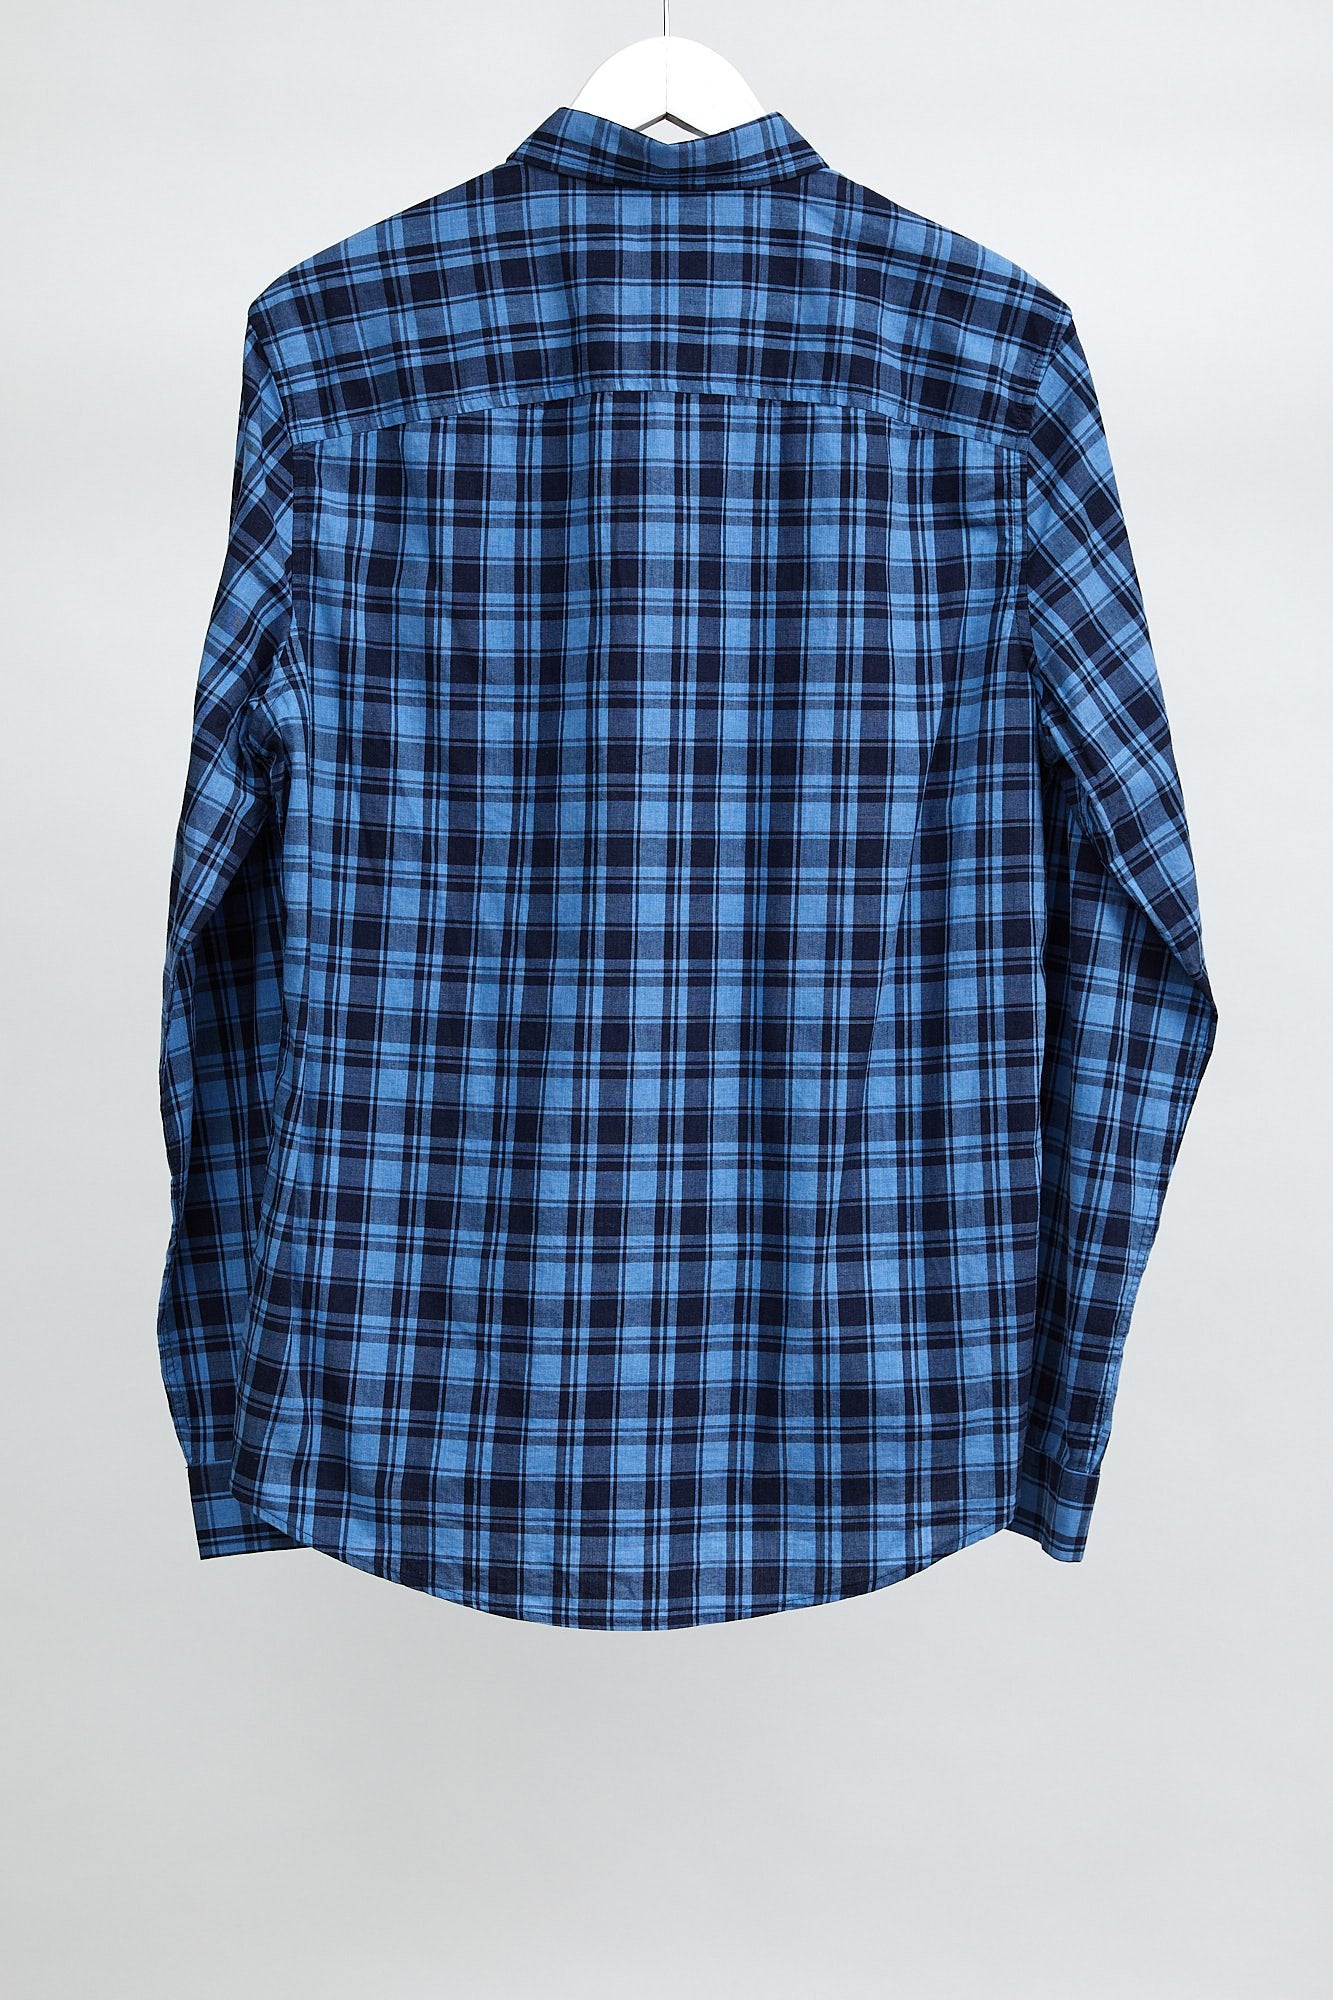 Mens Blue Check Oxford Shirt: Size Medium